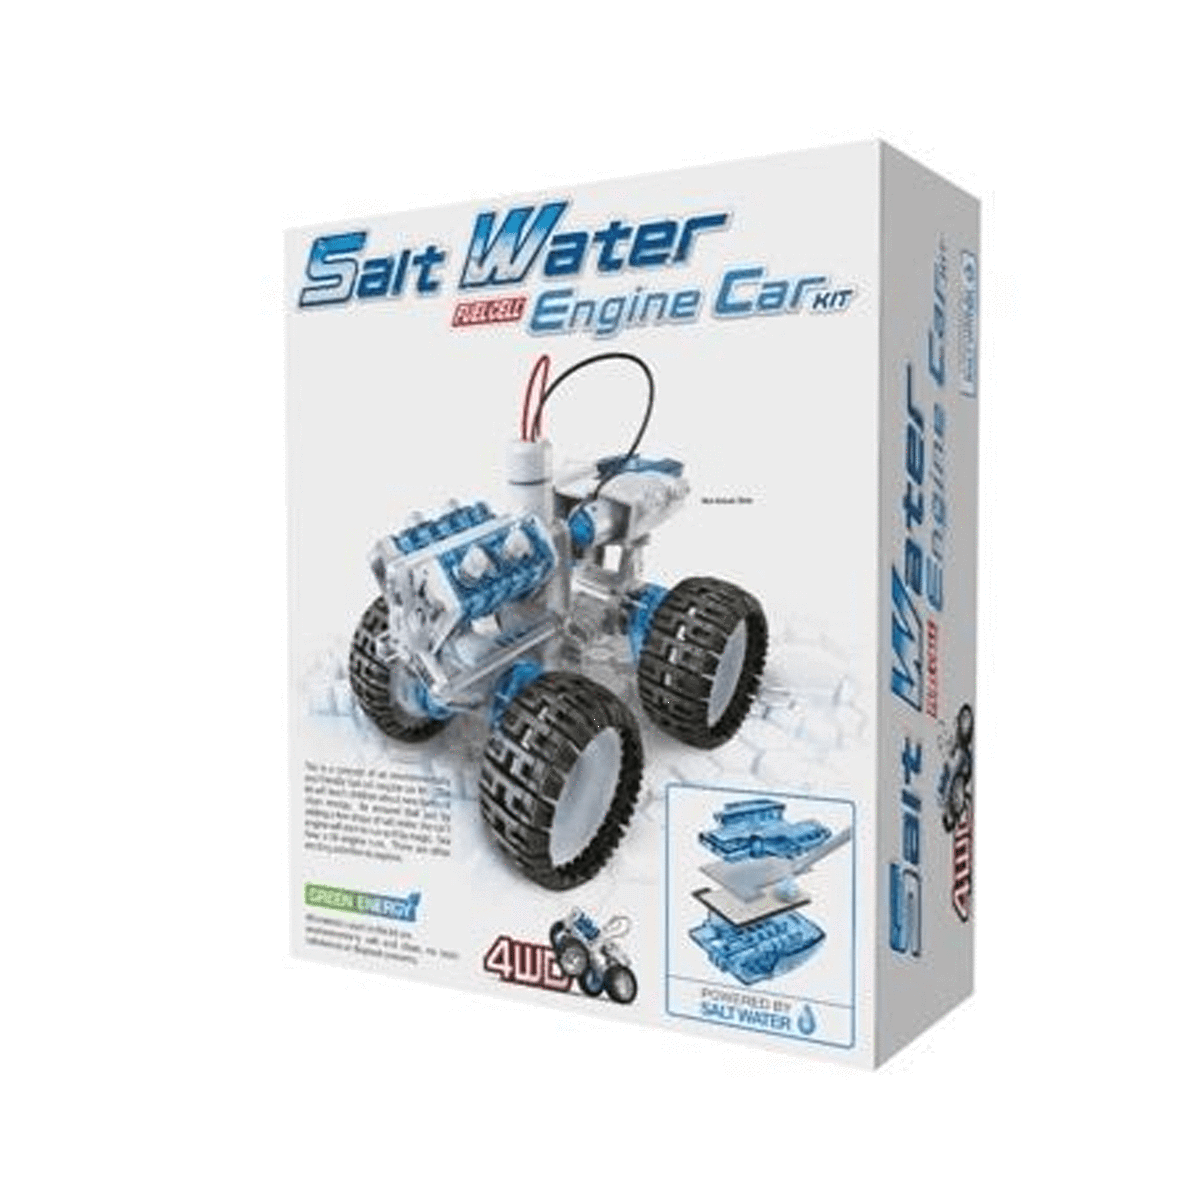 Red5 Salt Water Engine 4X4 Car Kit